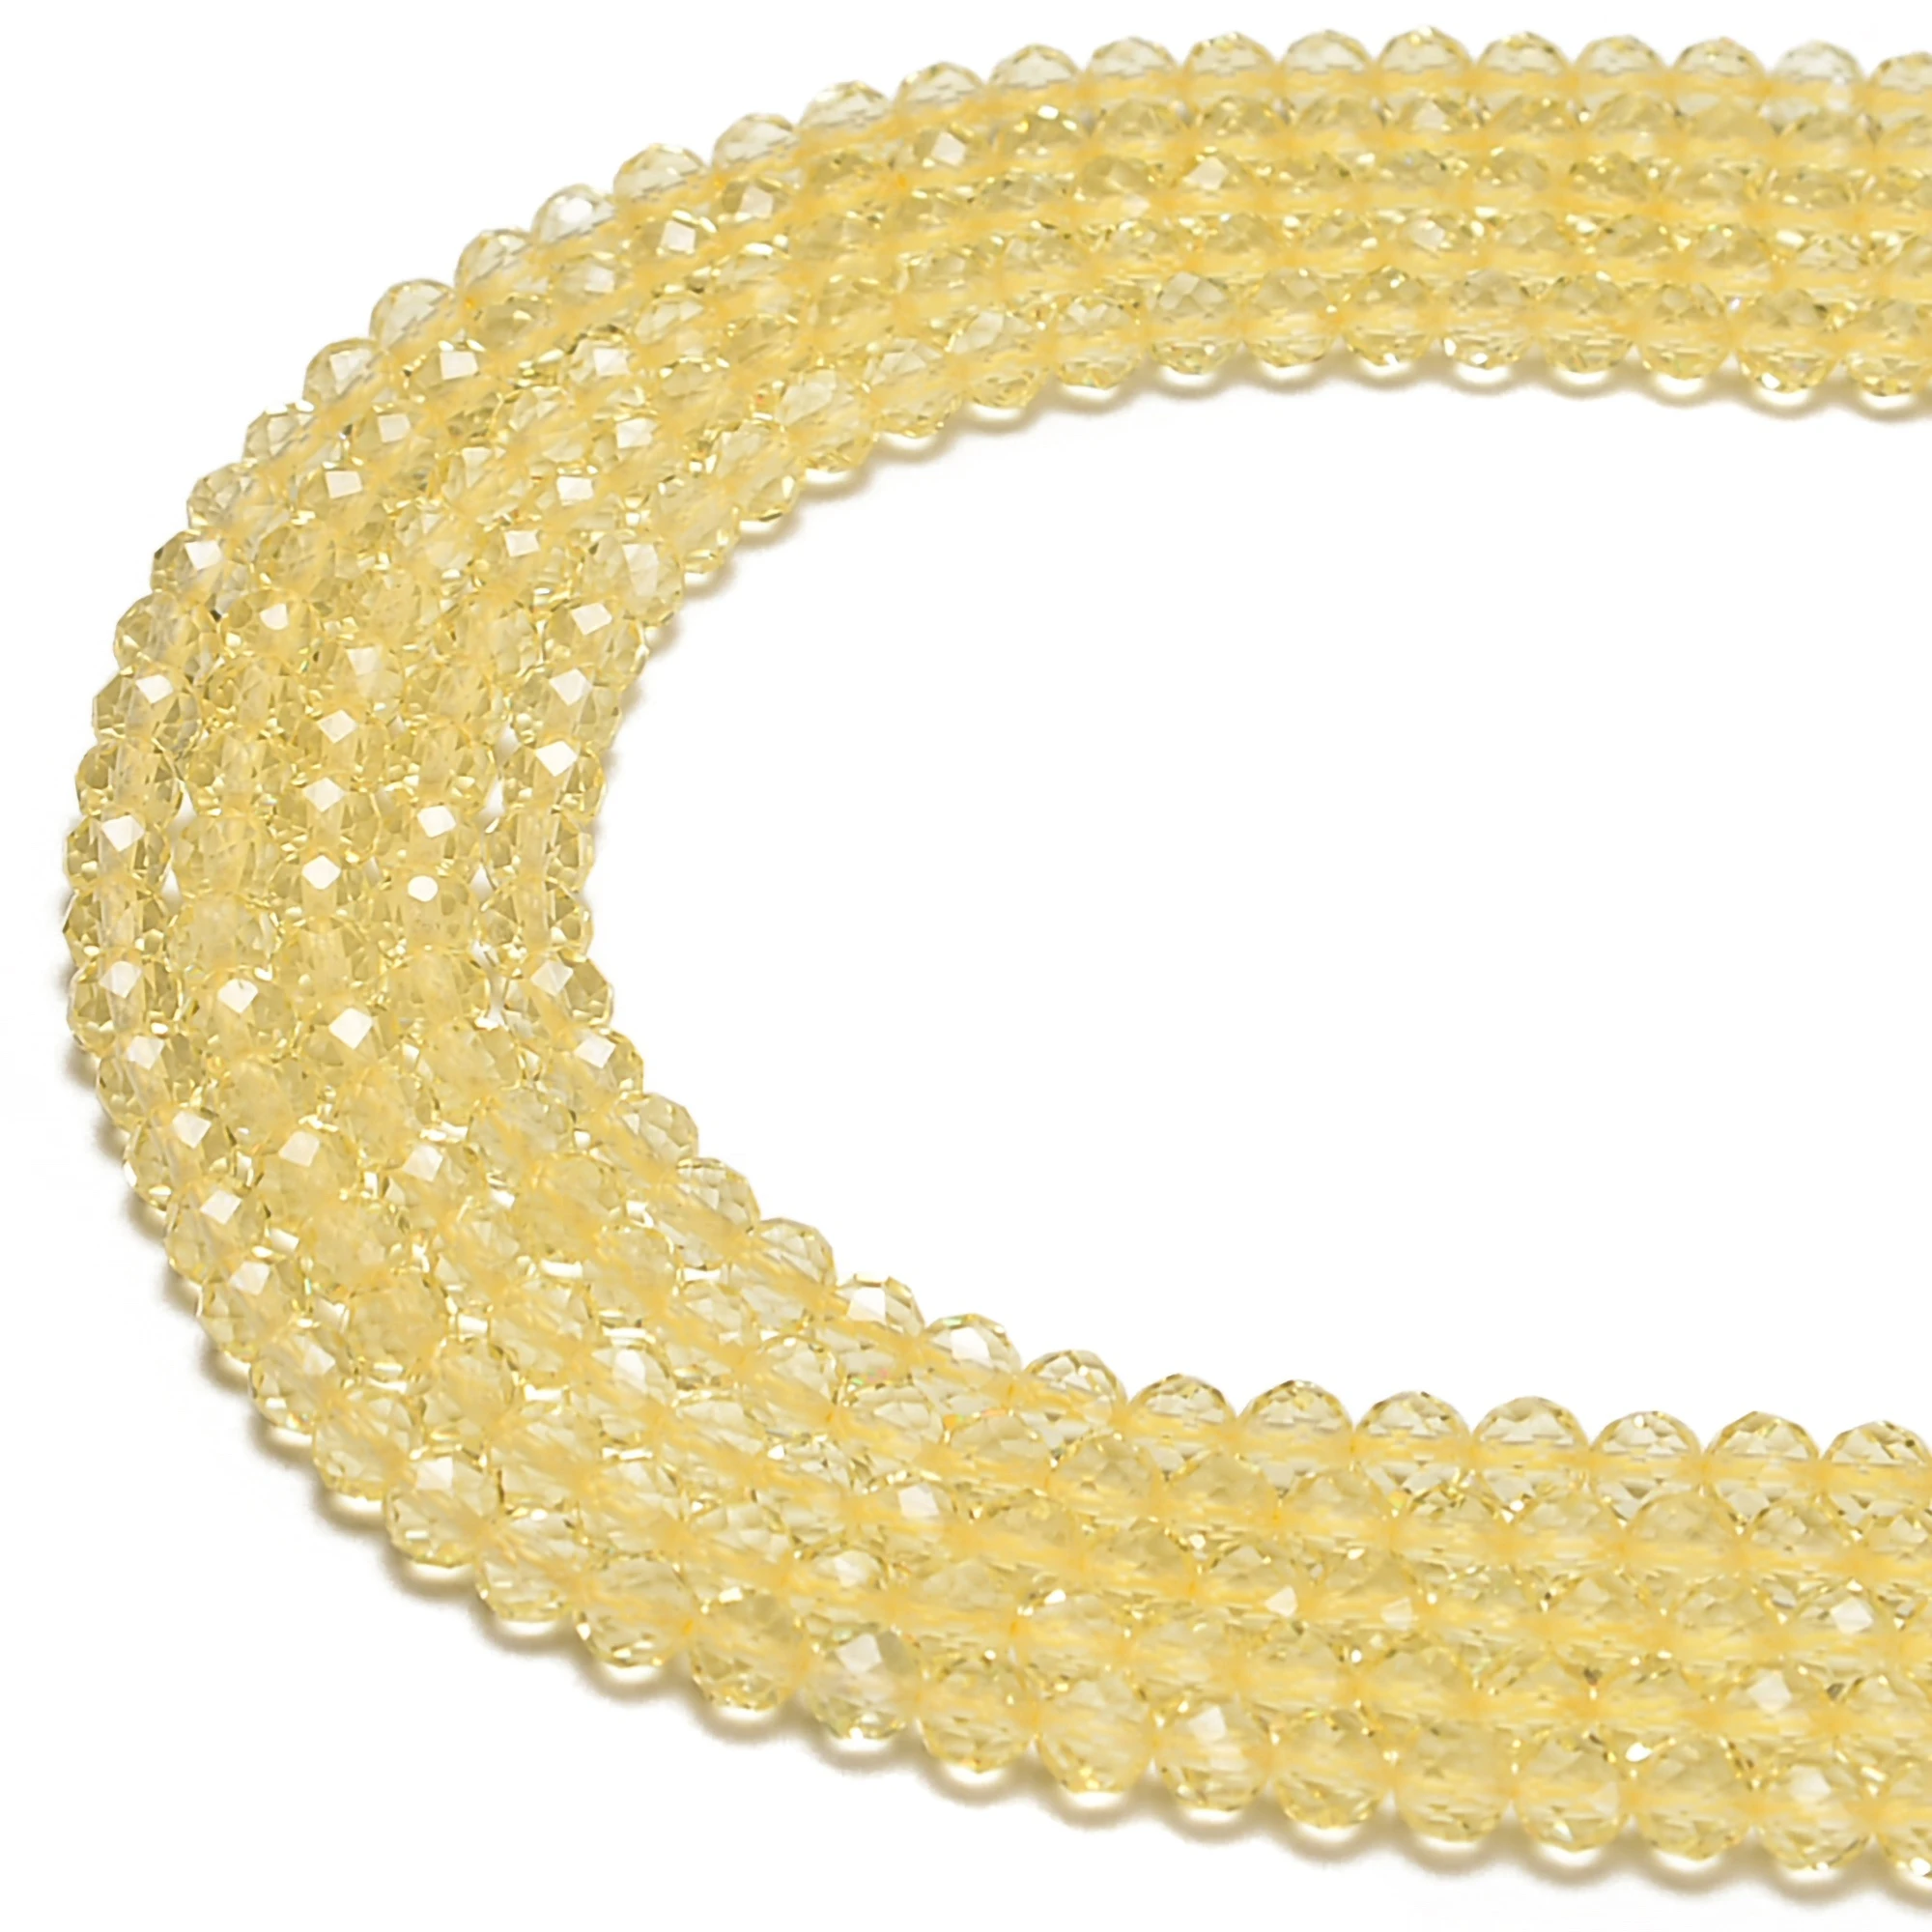 Lemon Quartz Nice 4-5mm Lemon Quartz Faceted Round Gemstone Loose Beads for Jewelry Making